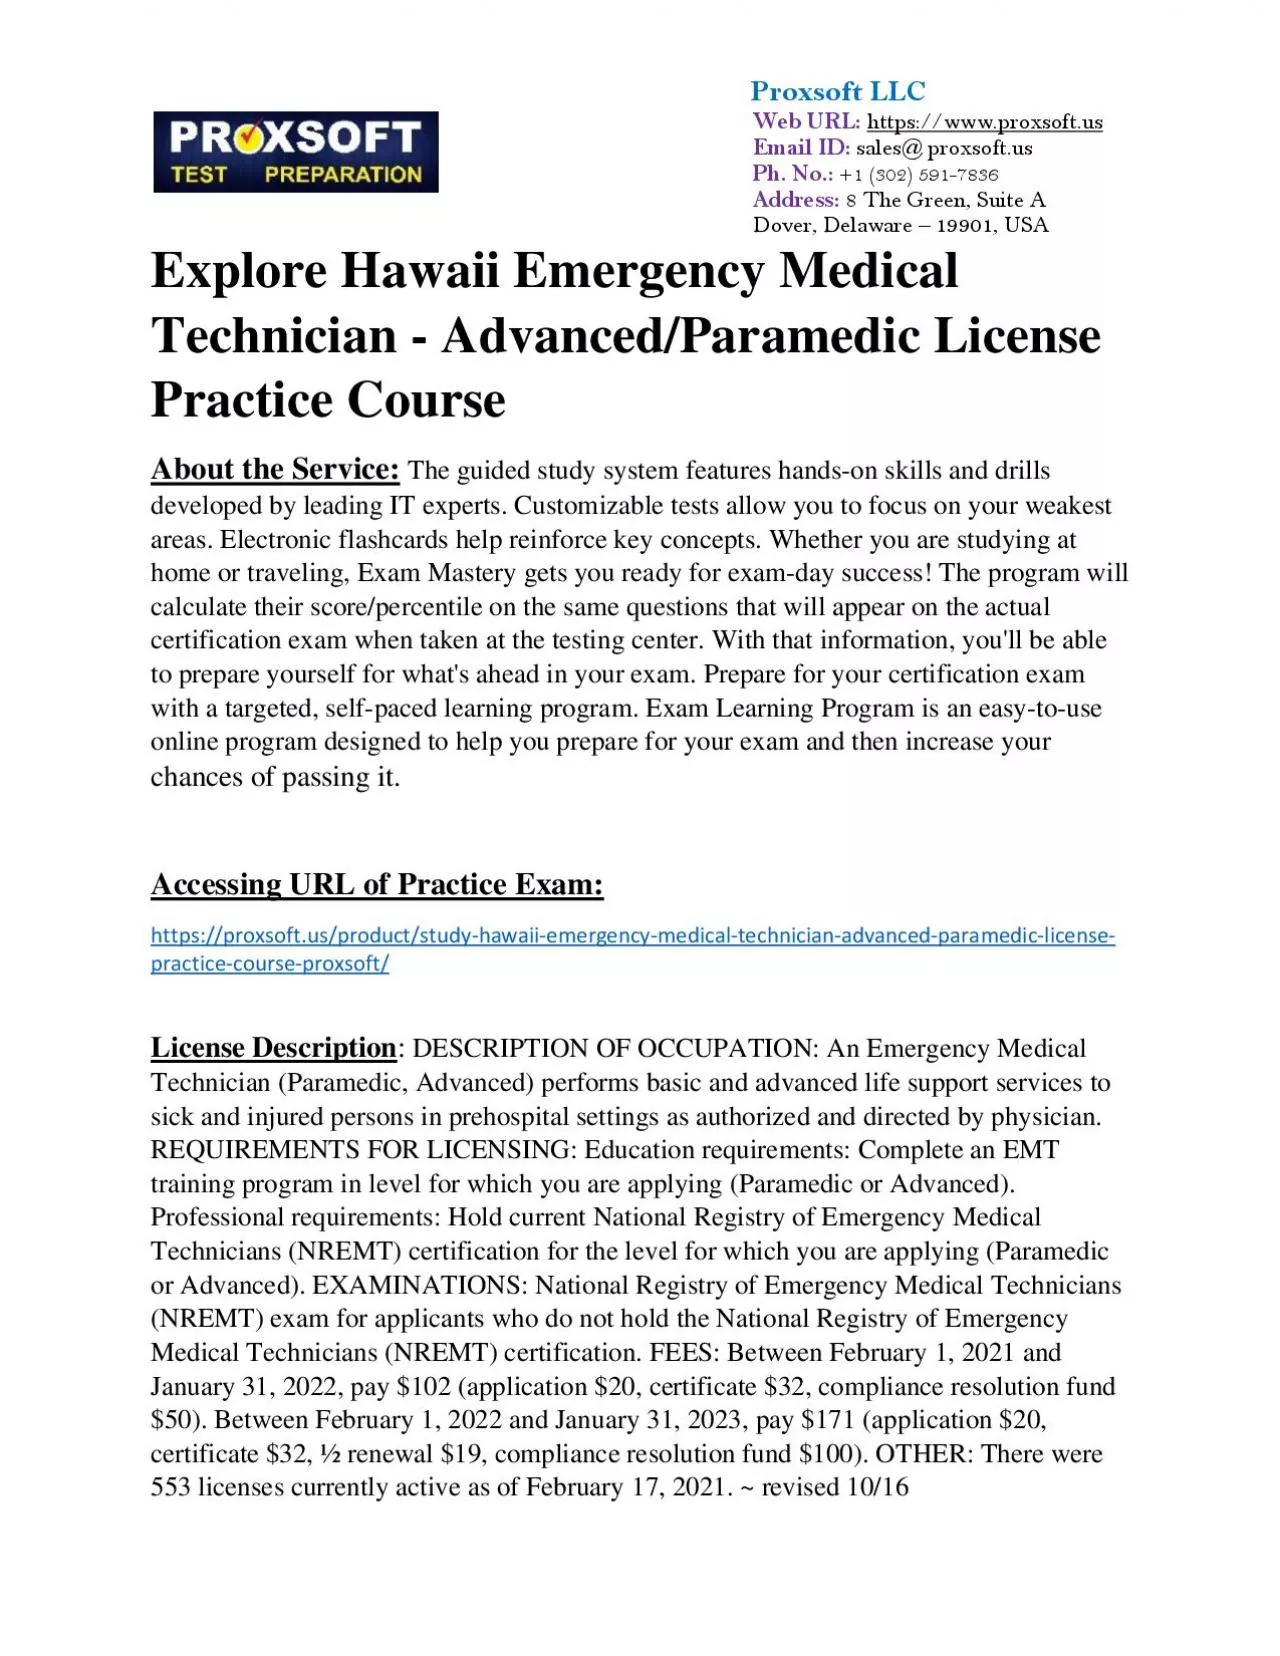 Explore Hawaii Elevator MechanicExplore Hawaii Emergency Medical Technician - Advanced/Paramedic